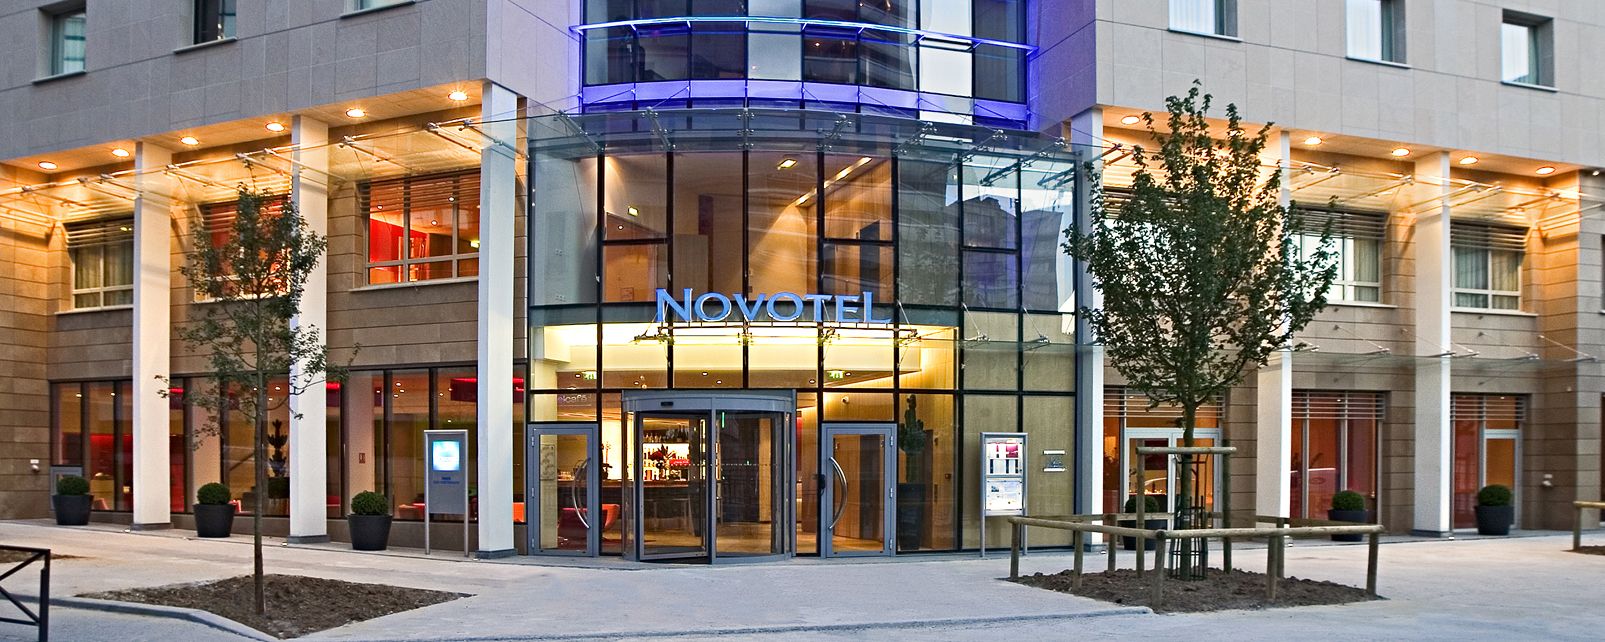 Hotel Novotel Paris Gare Montparnasse